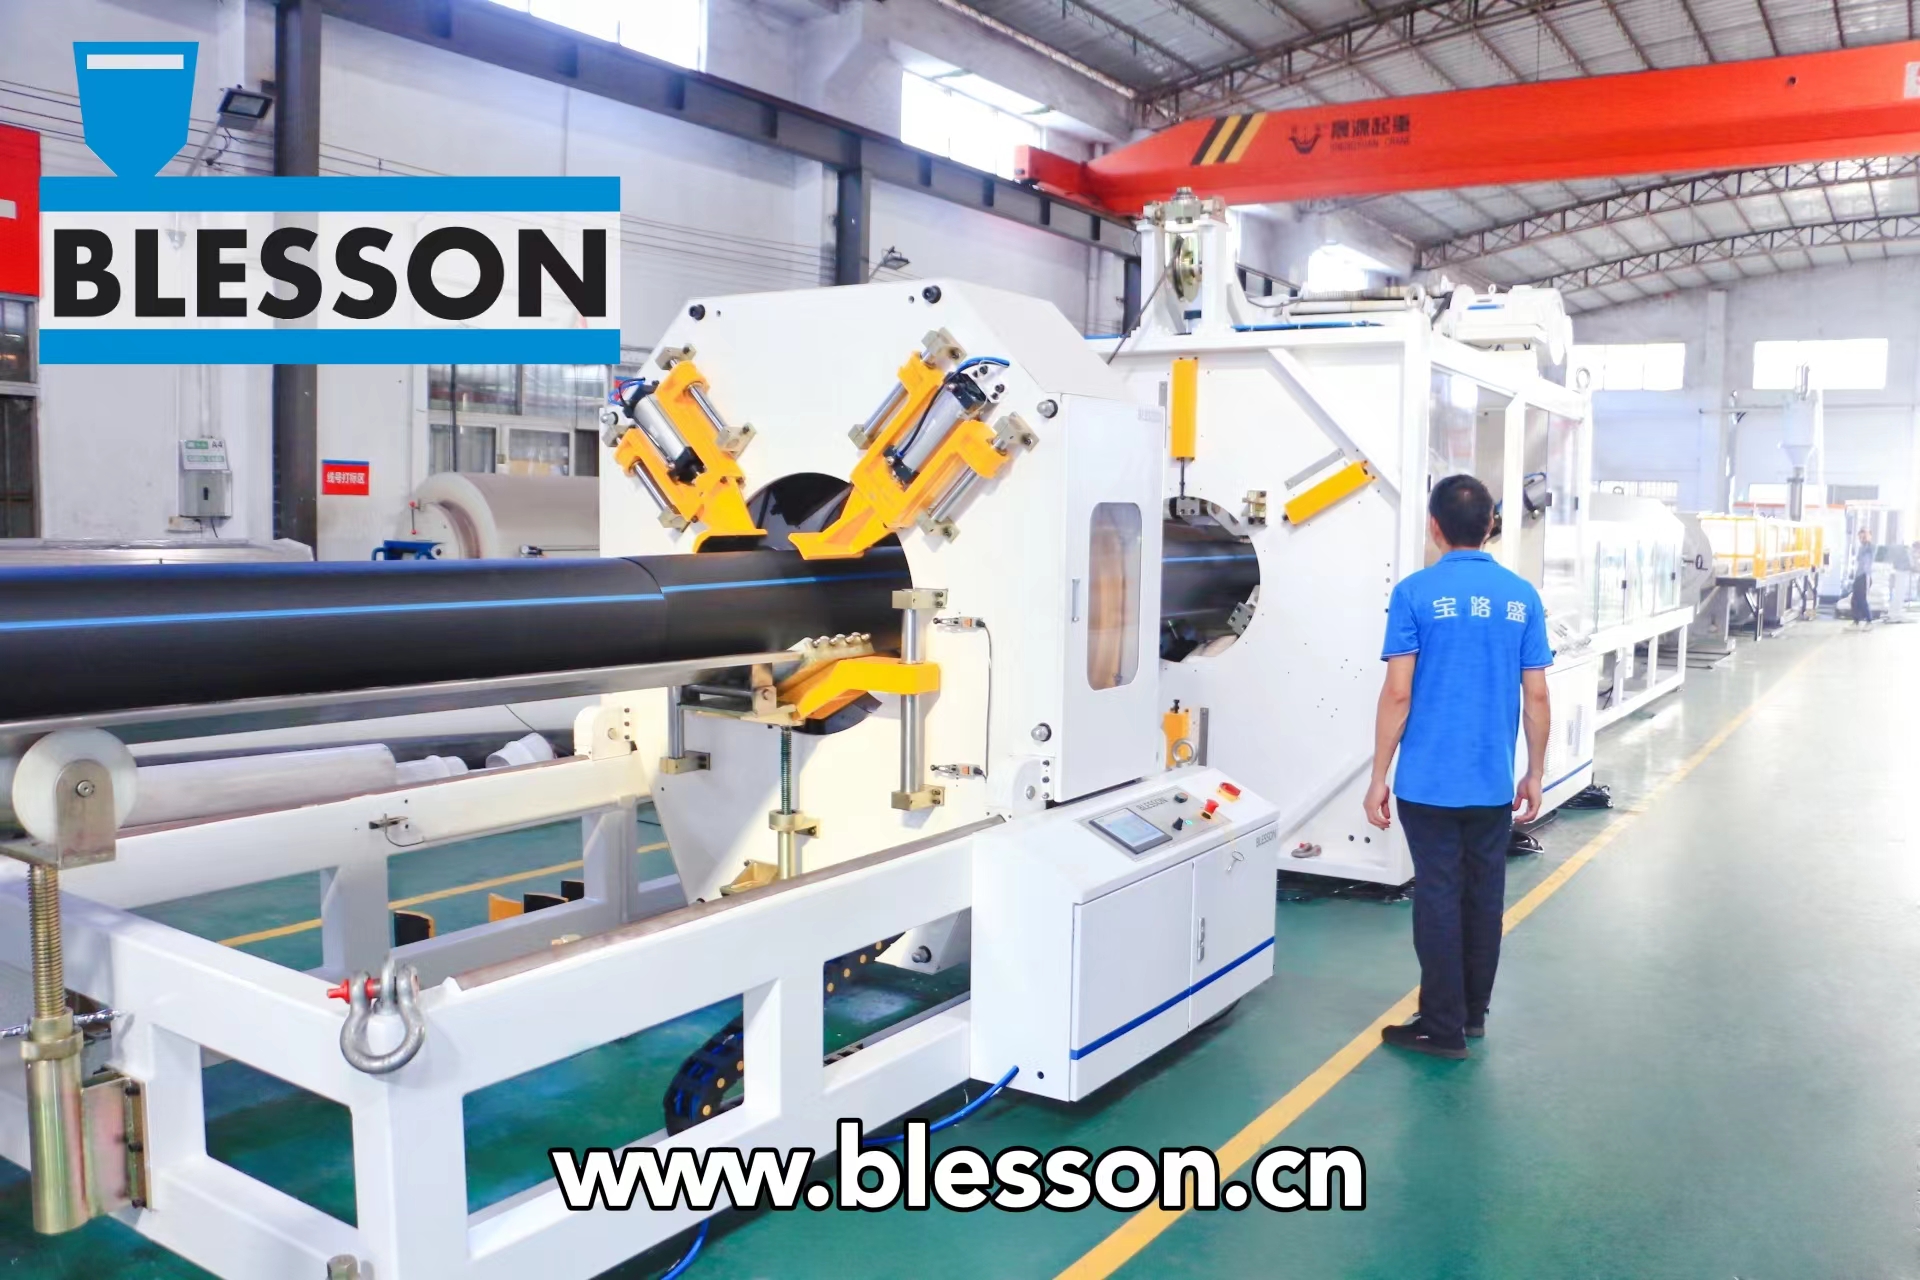 Blessson Precision Machinery (6)